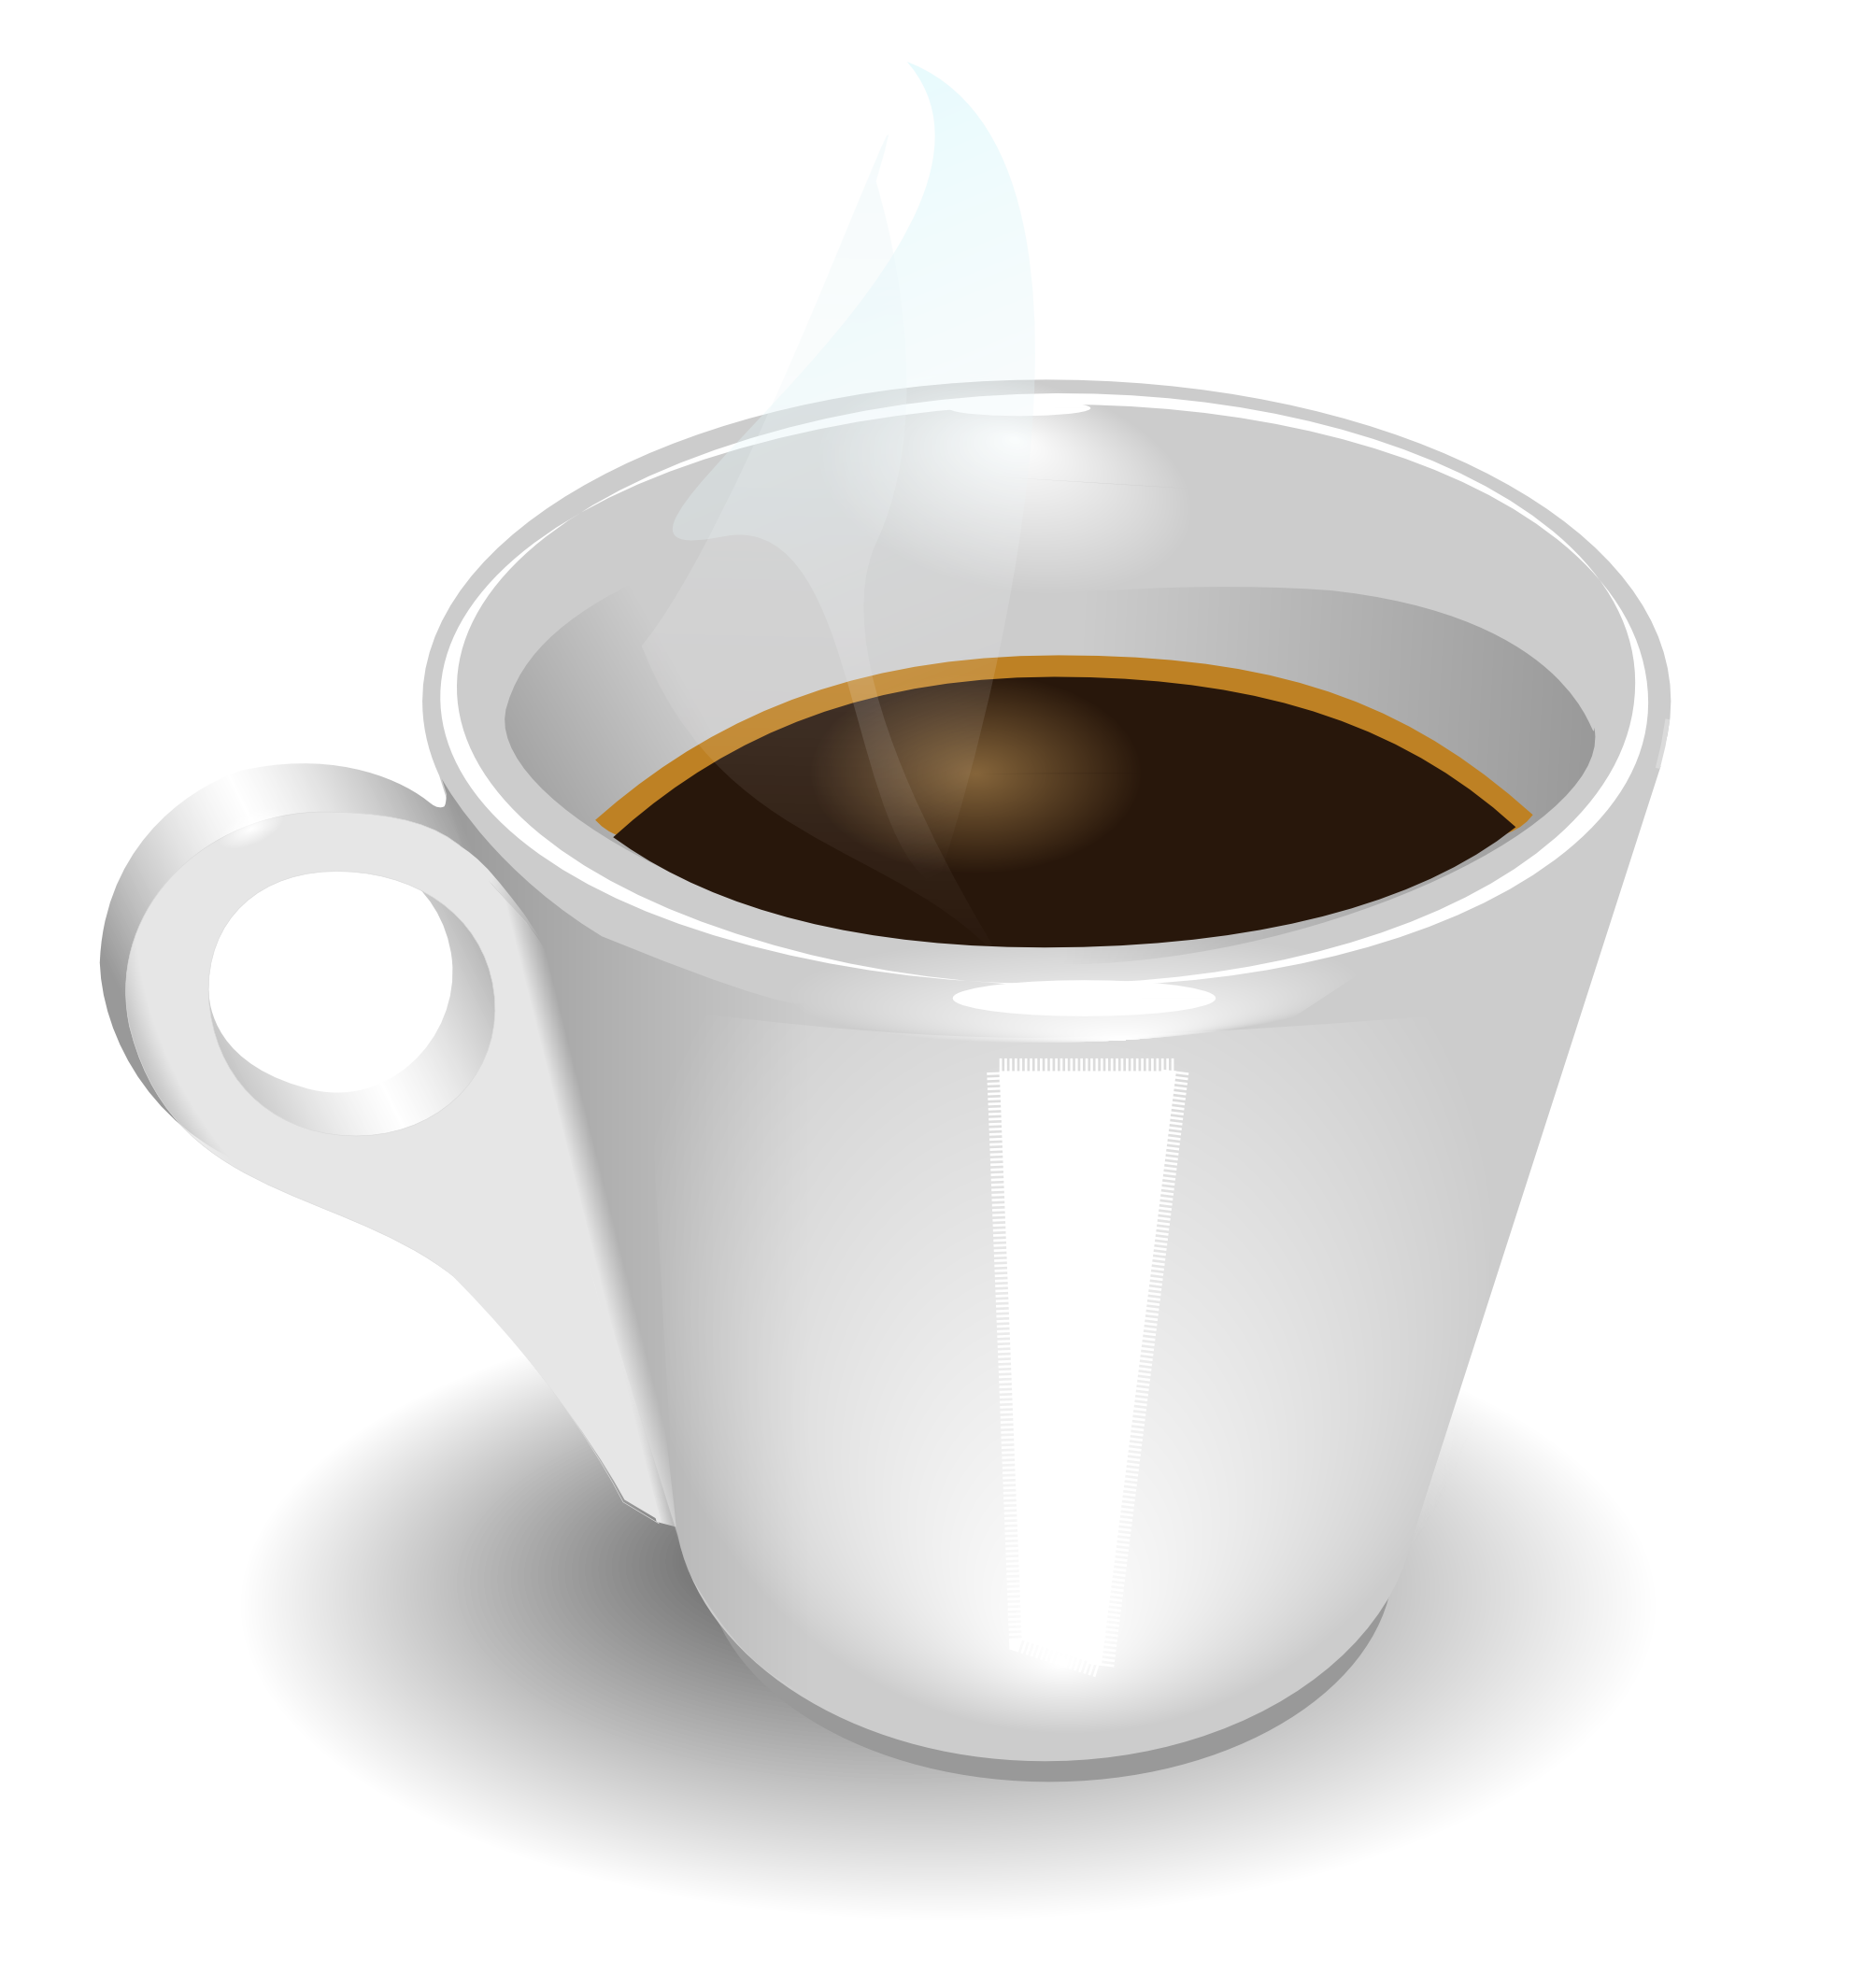 Taza de imágenes PNG descarga gratuita, taza de café, taza de té